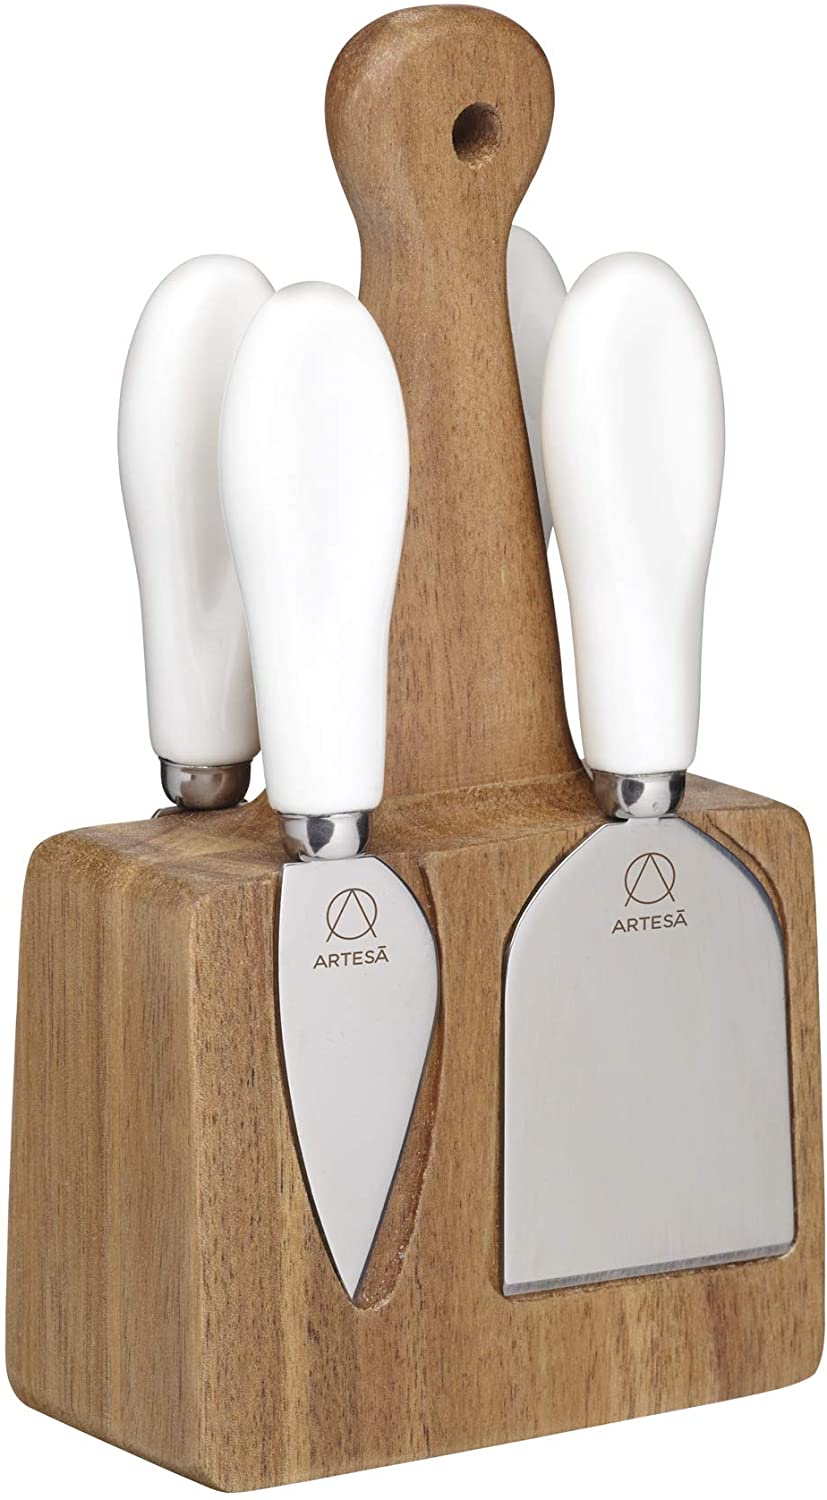 KitchenCraft Master Class Artesa Cheese Serving Set 5 10X50X18 CM – Acacia Wood